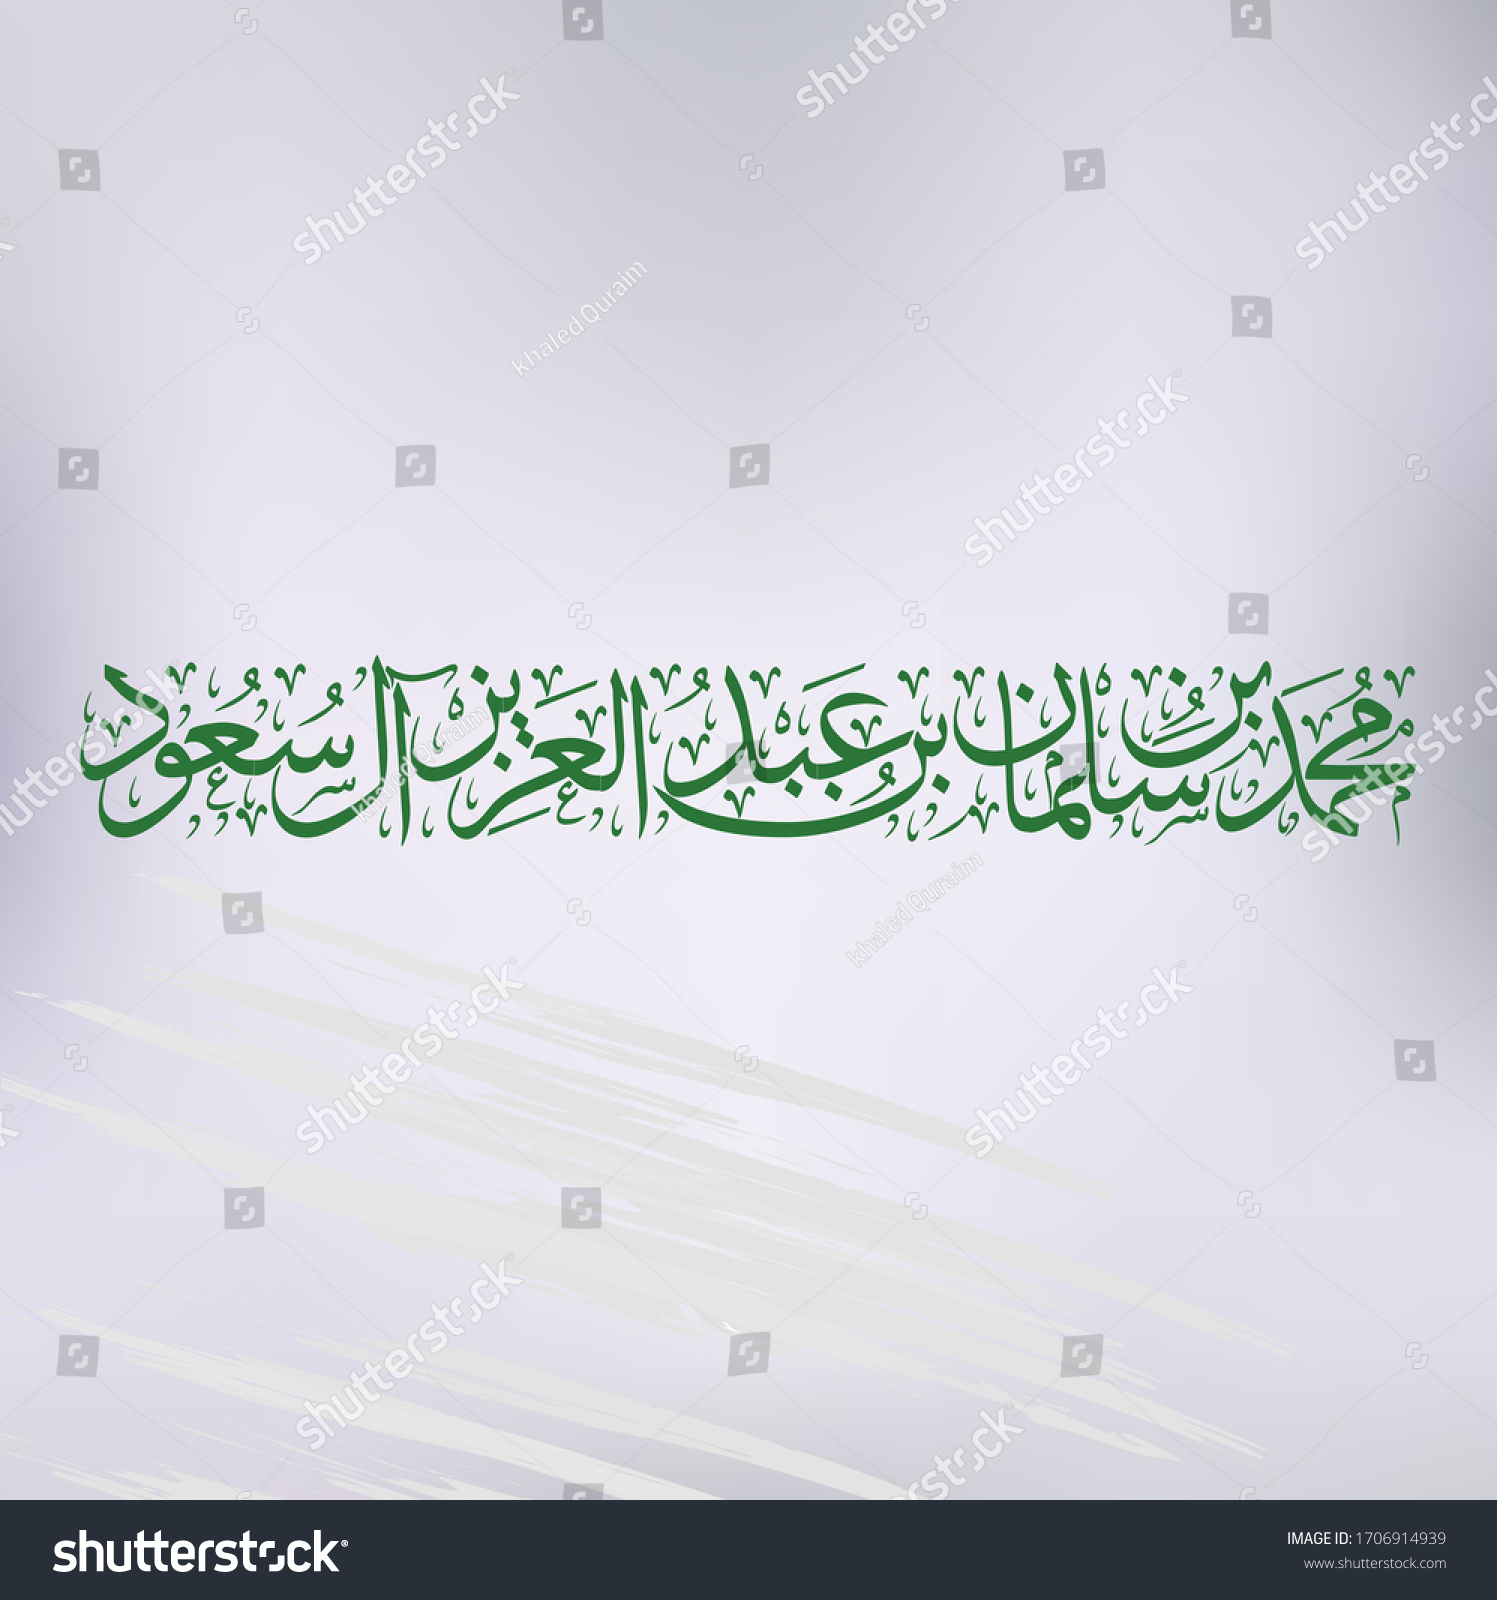 Crown Prince of Saudi Arabia Mohammad bin Salman vector  #1706914939